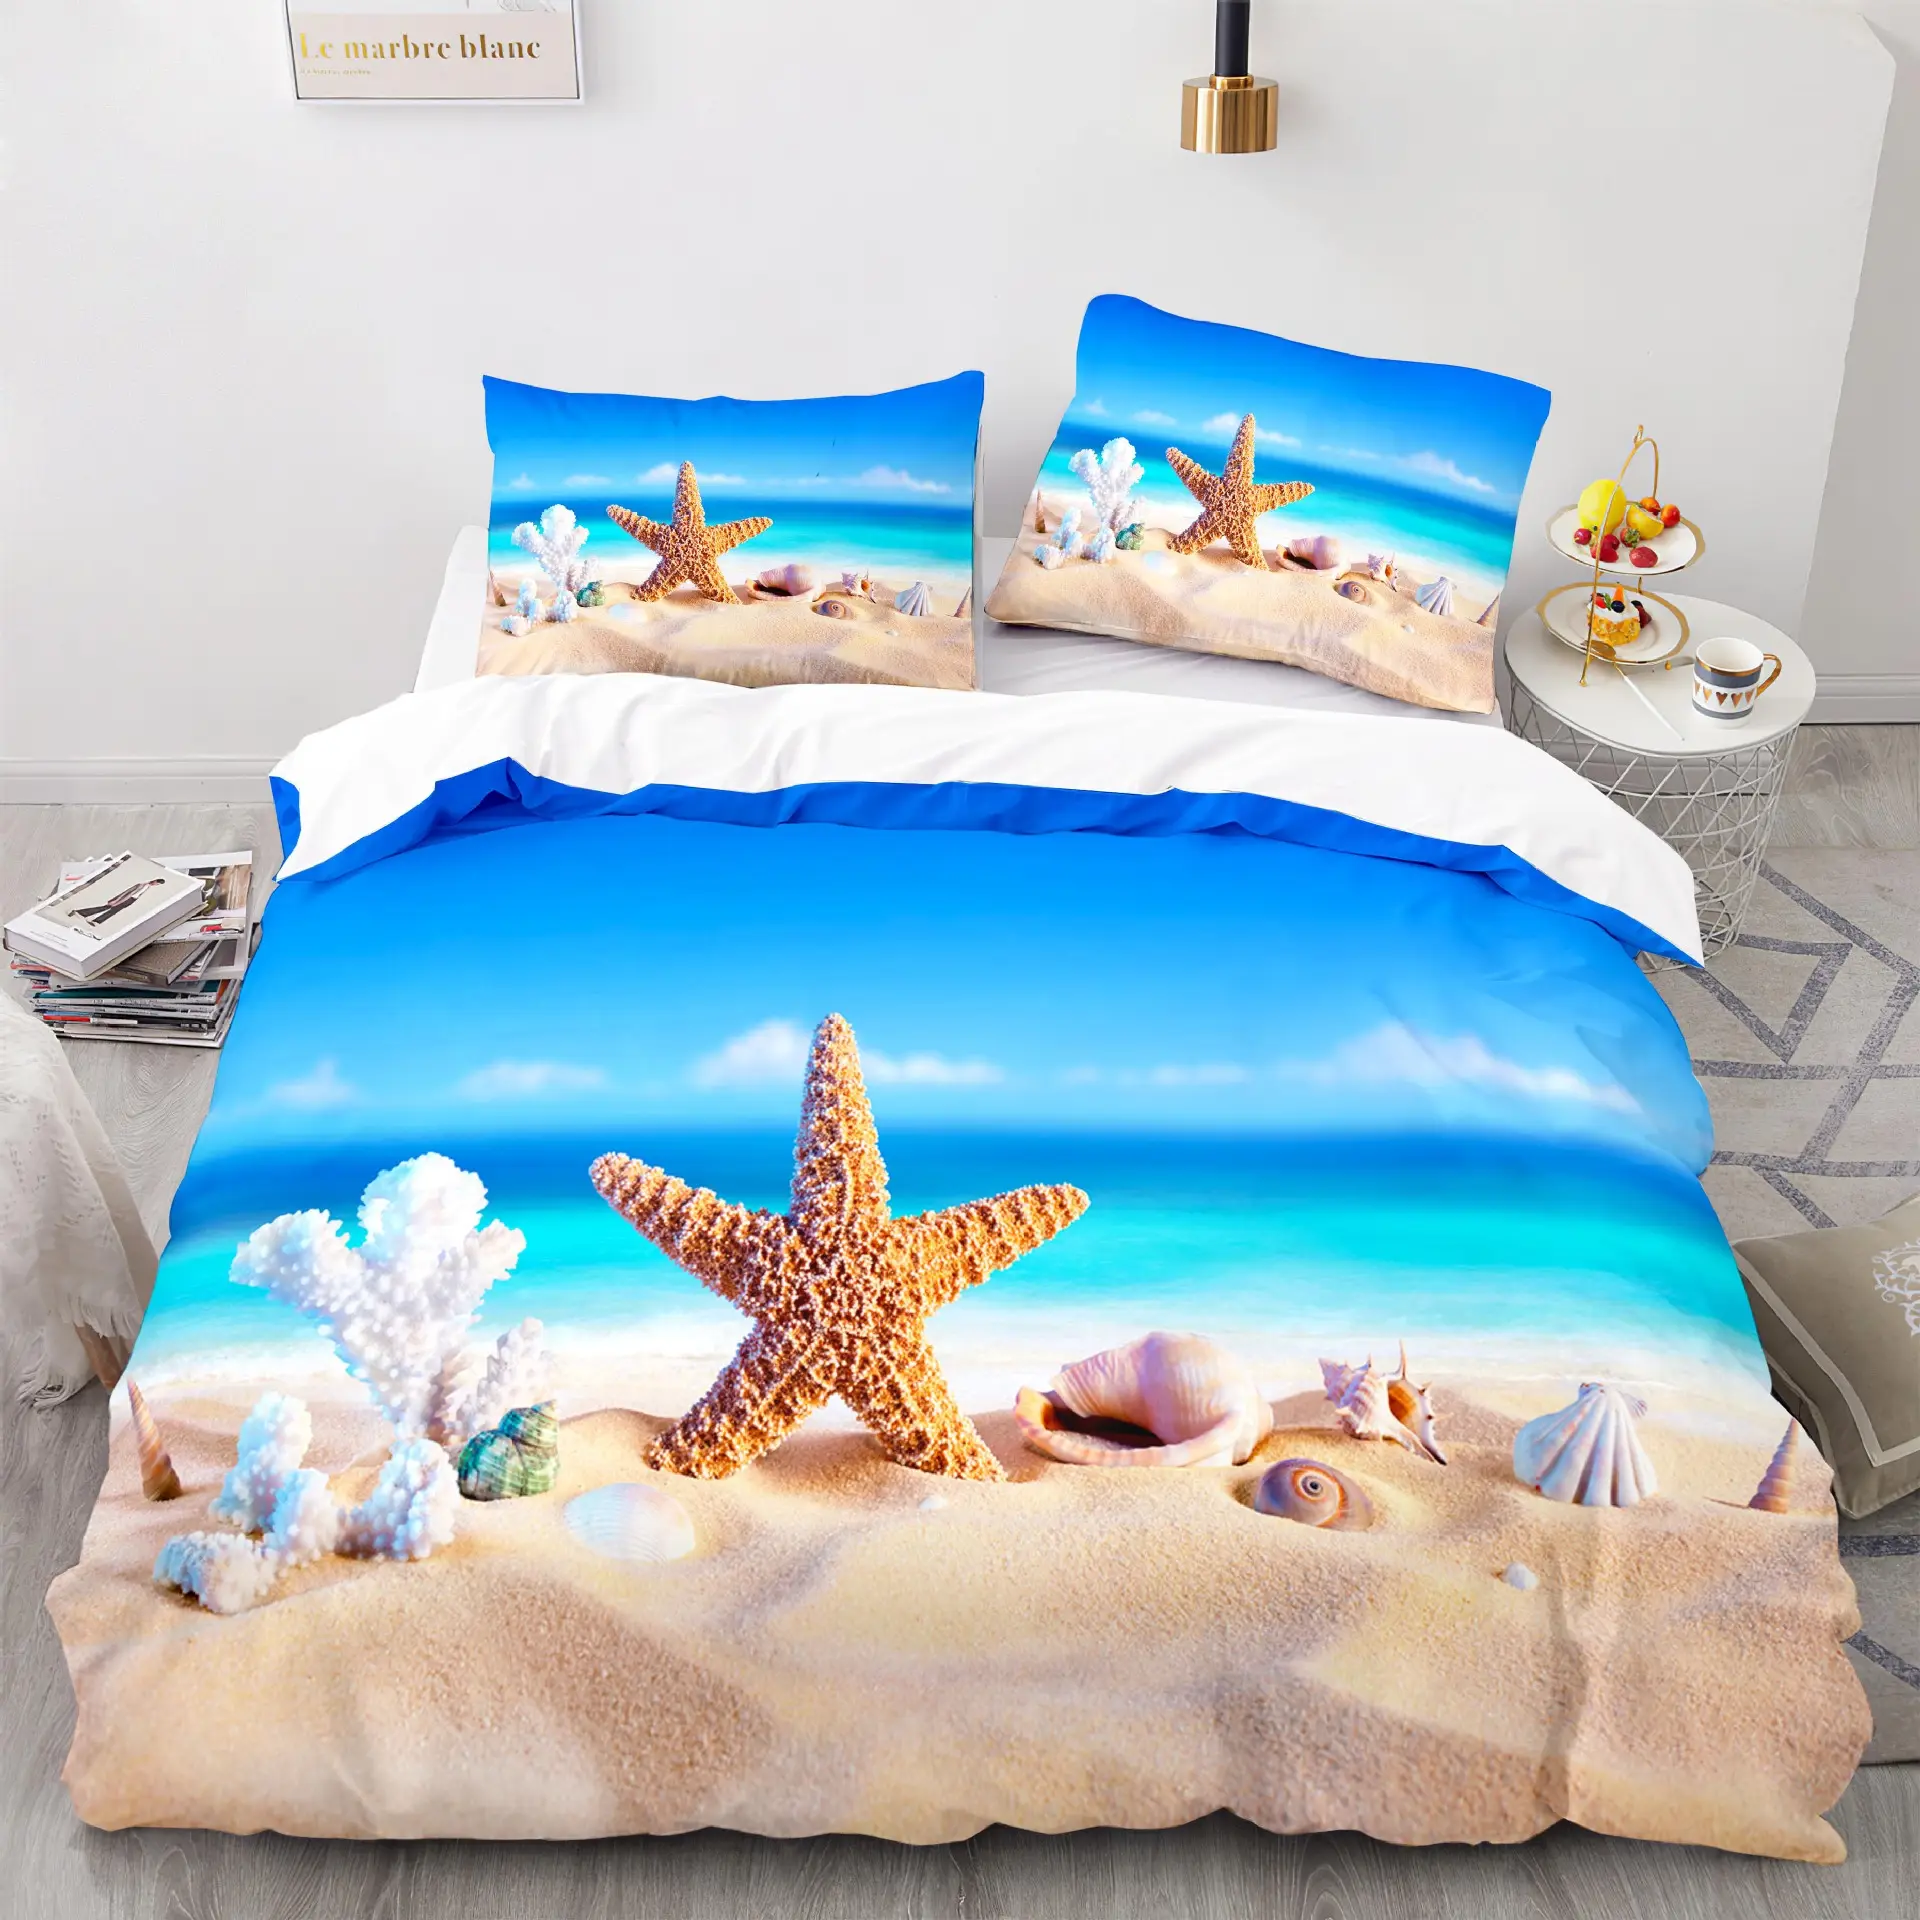 Wholesale Bedding Comforter Set 3 Piece Coastal Bedding Set Queen Size Beach Comforter Turquoise Blue Ocean Natural Themed Beach